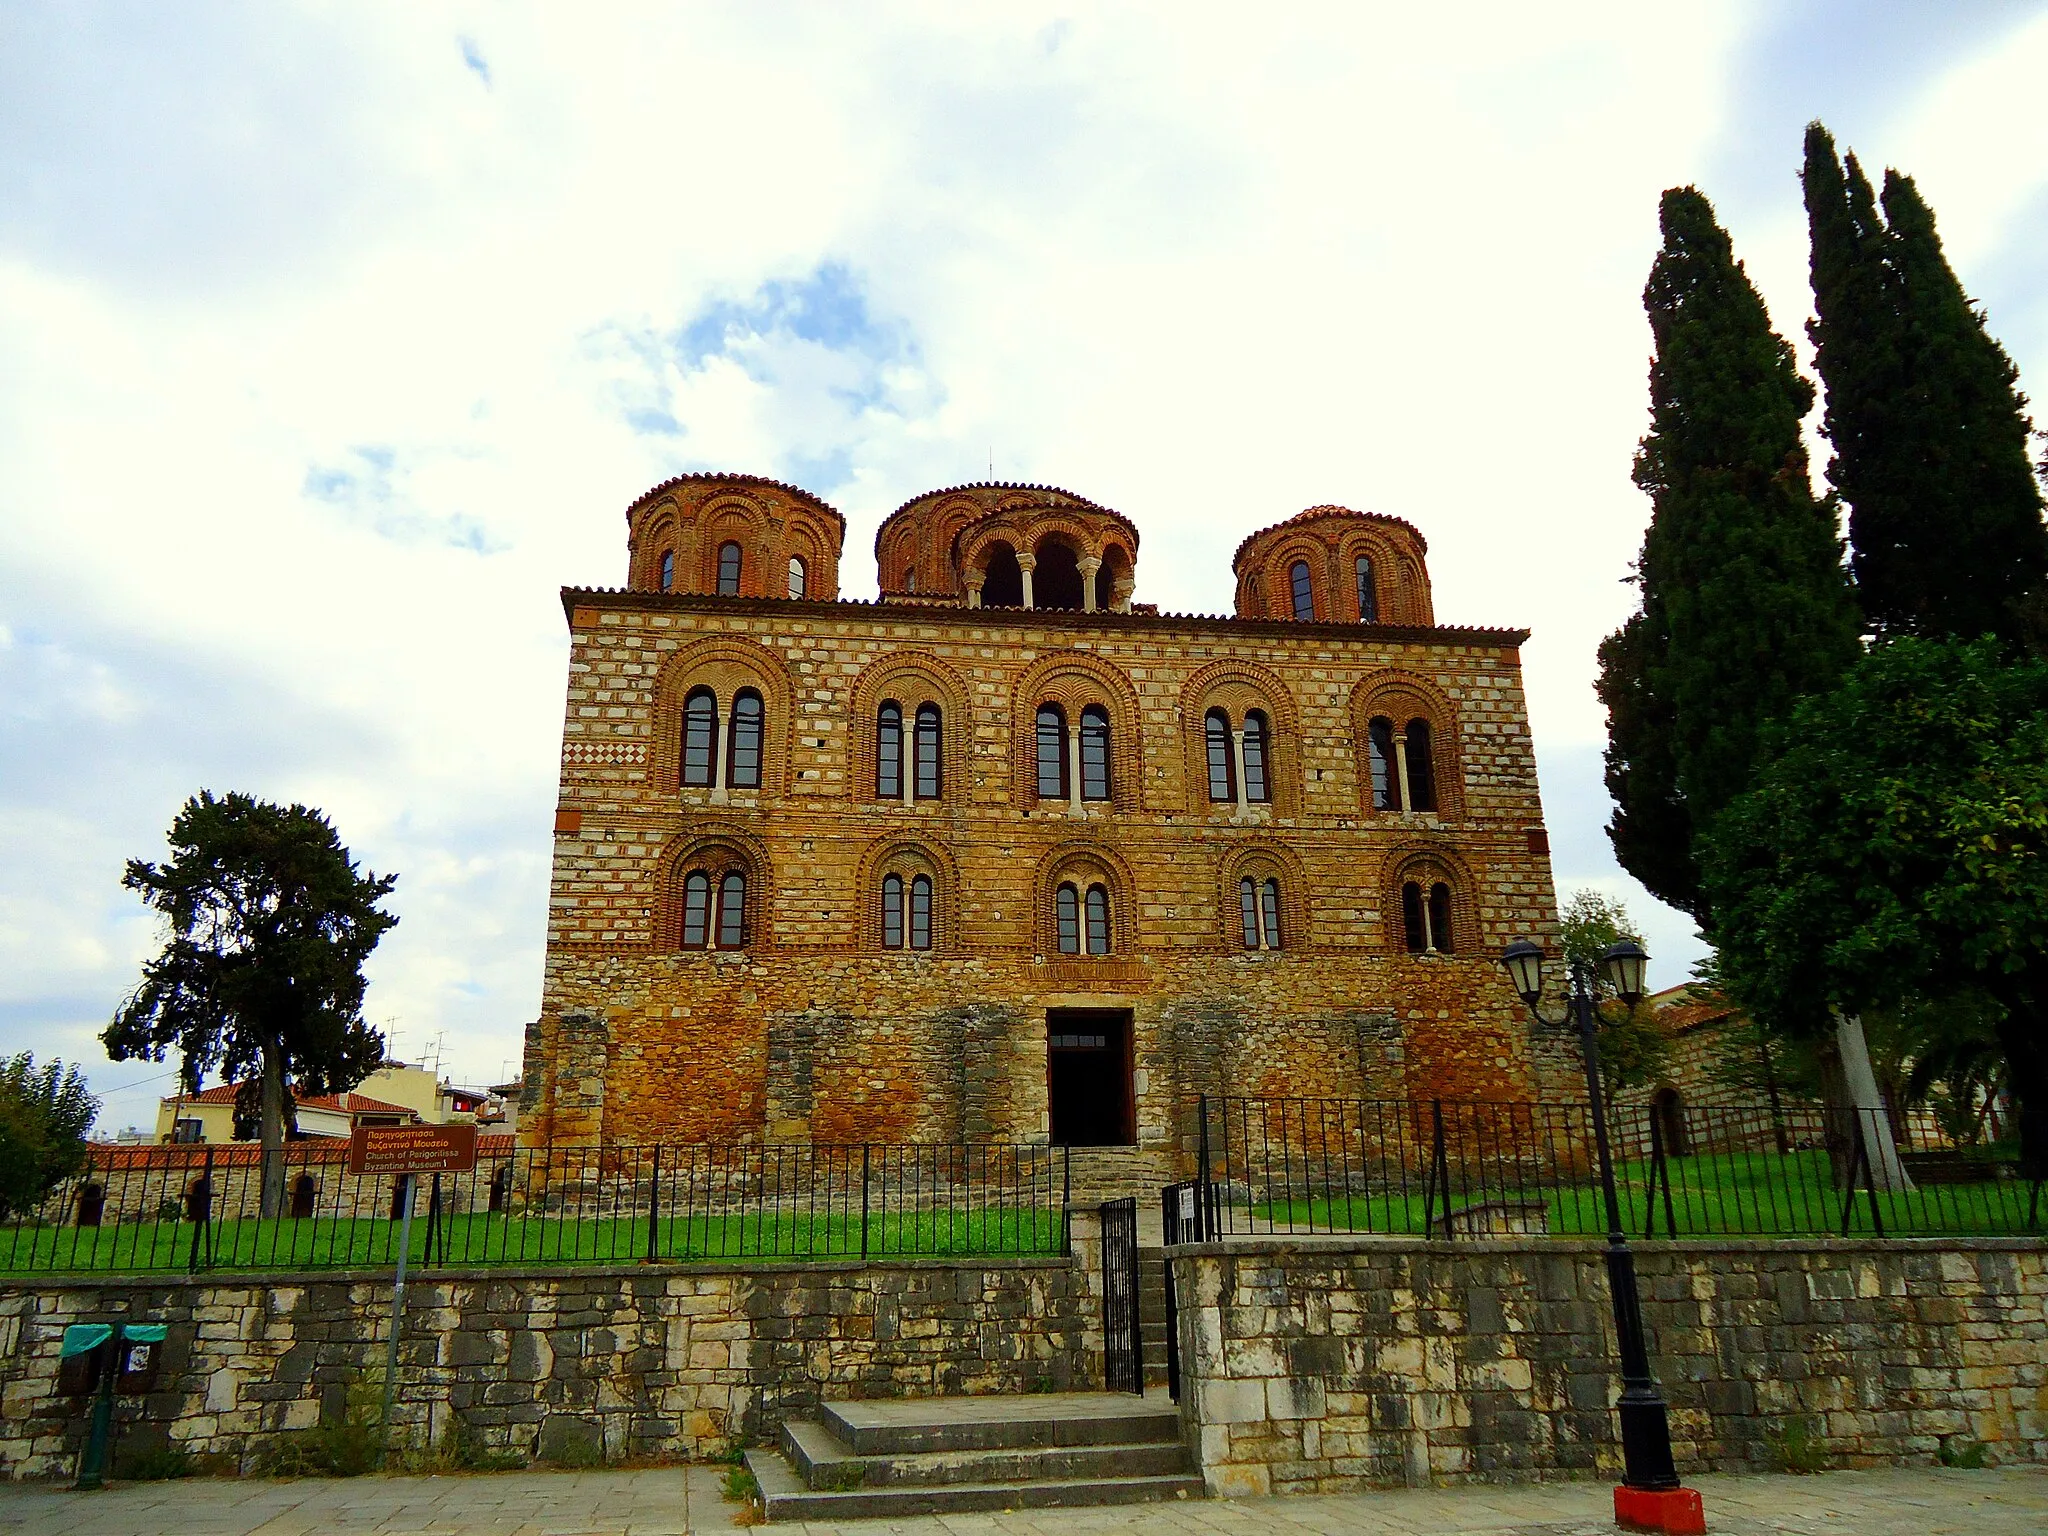 Photo showing: Ναός της Παρηγορήτισσας: Βυζαντινός ναός, ο οποίος βρίσκεται στη δυτική πλαγιά του λόφου Περάνθης. Θεμελιώθηκε το 1285 από τον Νικηφόρο Α' Κομνηνό Δούκα και τη γυναίκα του Άννα Παλαιολογίνα Κατακουζηνή. Σήμερα σώζονται ο ναός, η Τράπεζα και δεκαέξι κελιά. Ο σημερινός ναός είναι αξιοπρόσεκτος για την αρχιτεκτονική του, τη διακοσμησή του αλλά και τις τεράστιες διαστάσεις. Ο ναός εμφανίζει μήκος δυτικής πλευράς 22,10μ., μήκος πλάγιων πλευρών 20,27μ, ύψος 20,28μ, εξωτερική διάμετρος κεντρικού τρούλλου 7,58μ και ύψος τρούλλου 3,50μ.